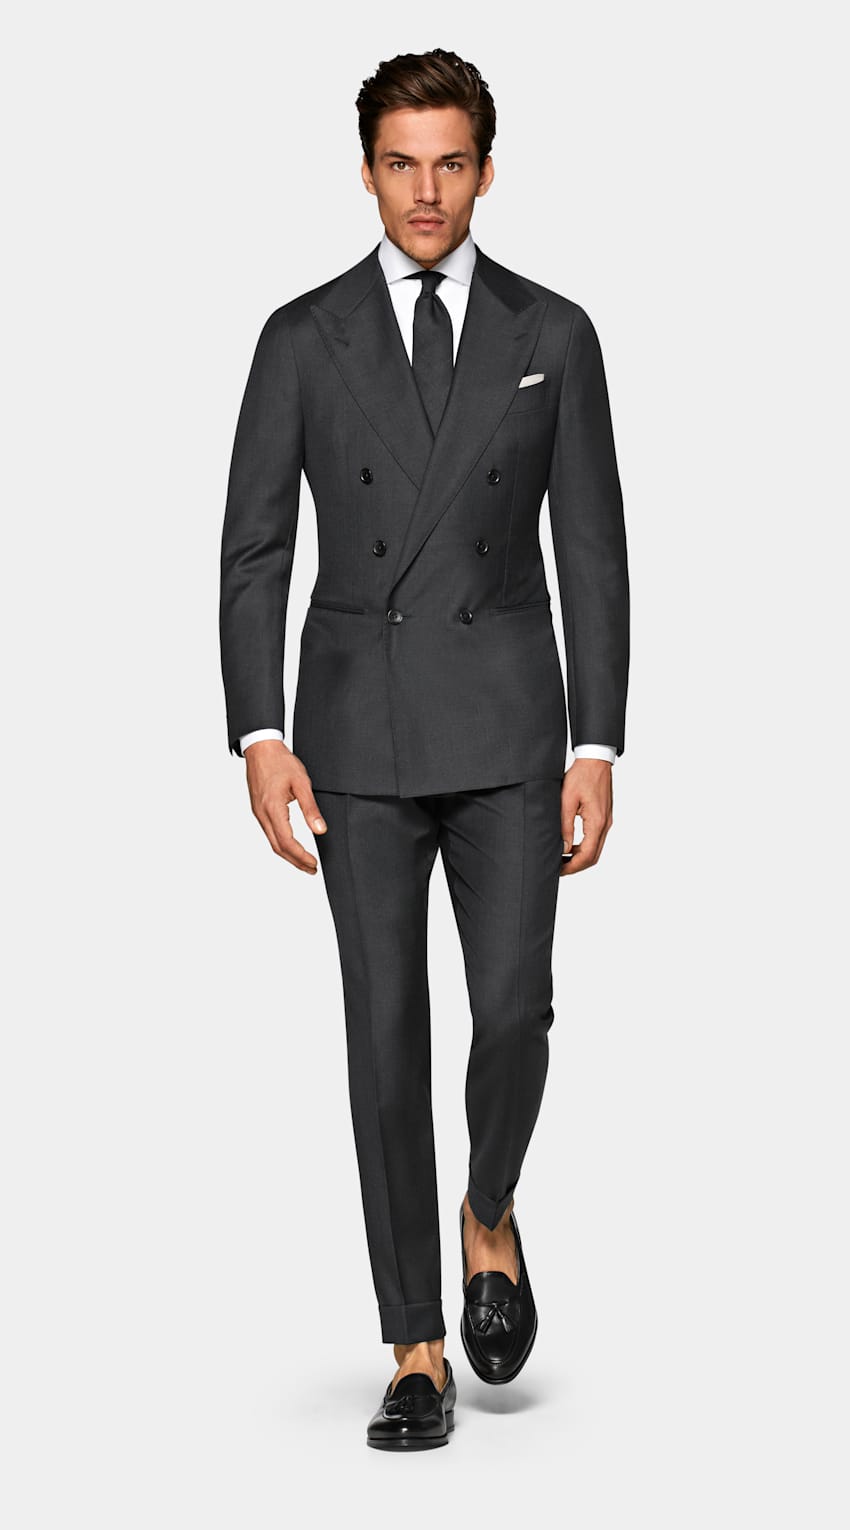 SUITSUPPLY Pure S110's Wool by Vitale Barberis Canonico, Italy Dark Grey Havana Suit